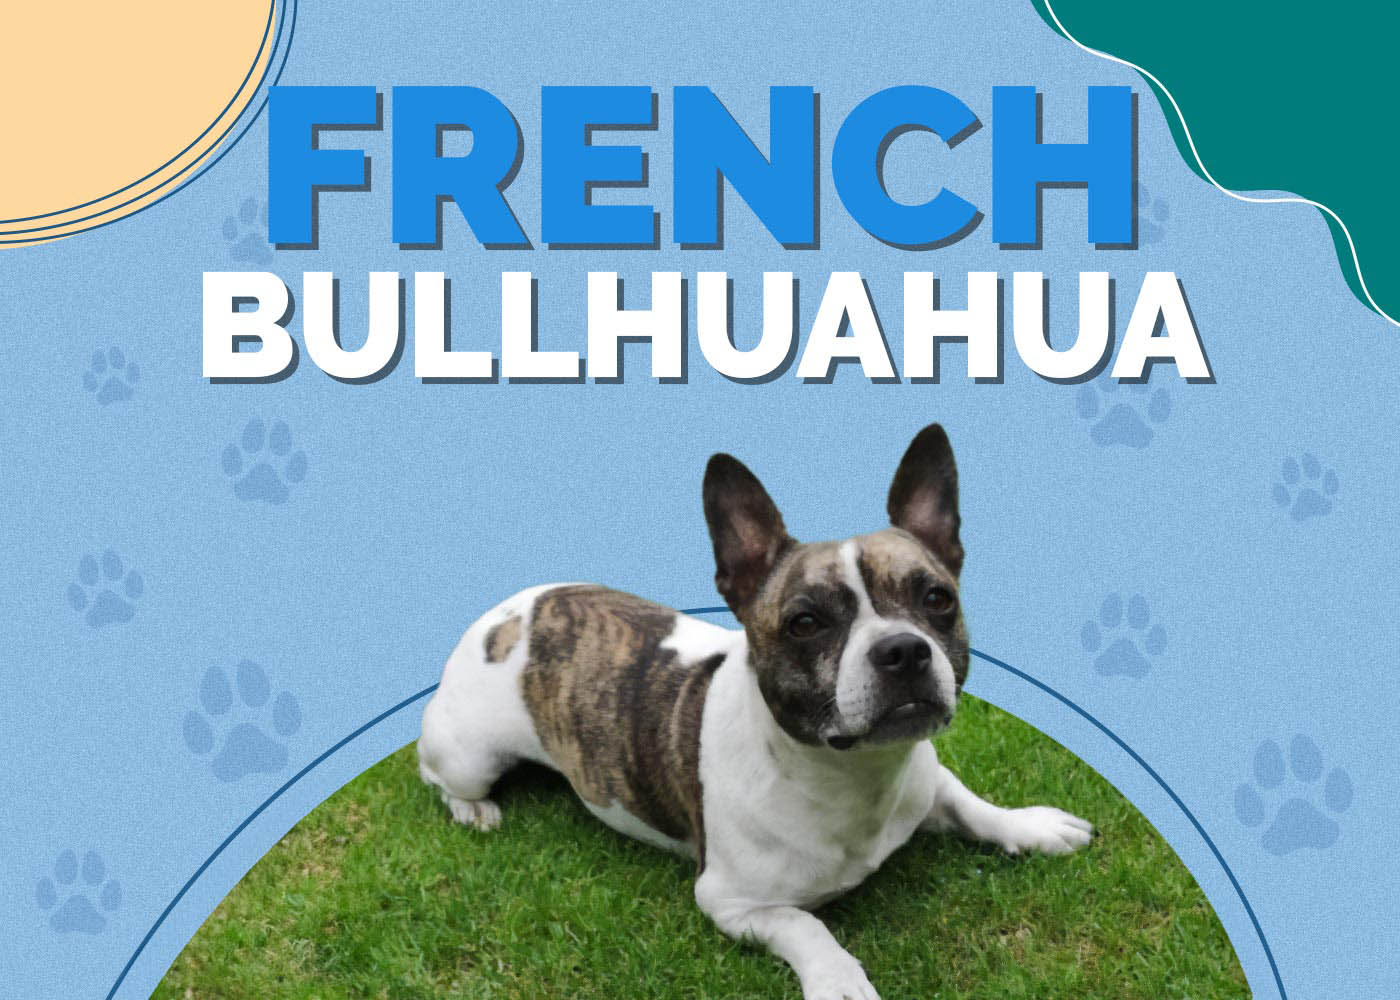 French Bullhuahua (French Bulldog & Chihuahua Mix)